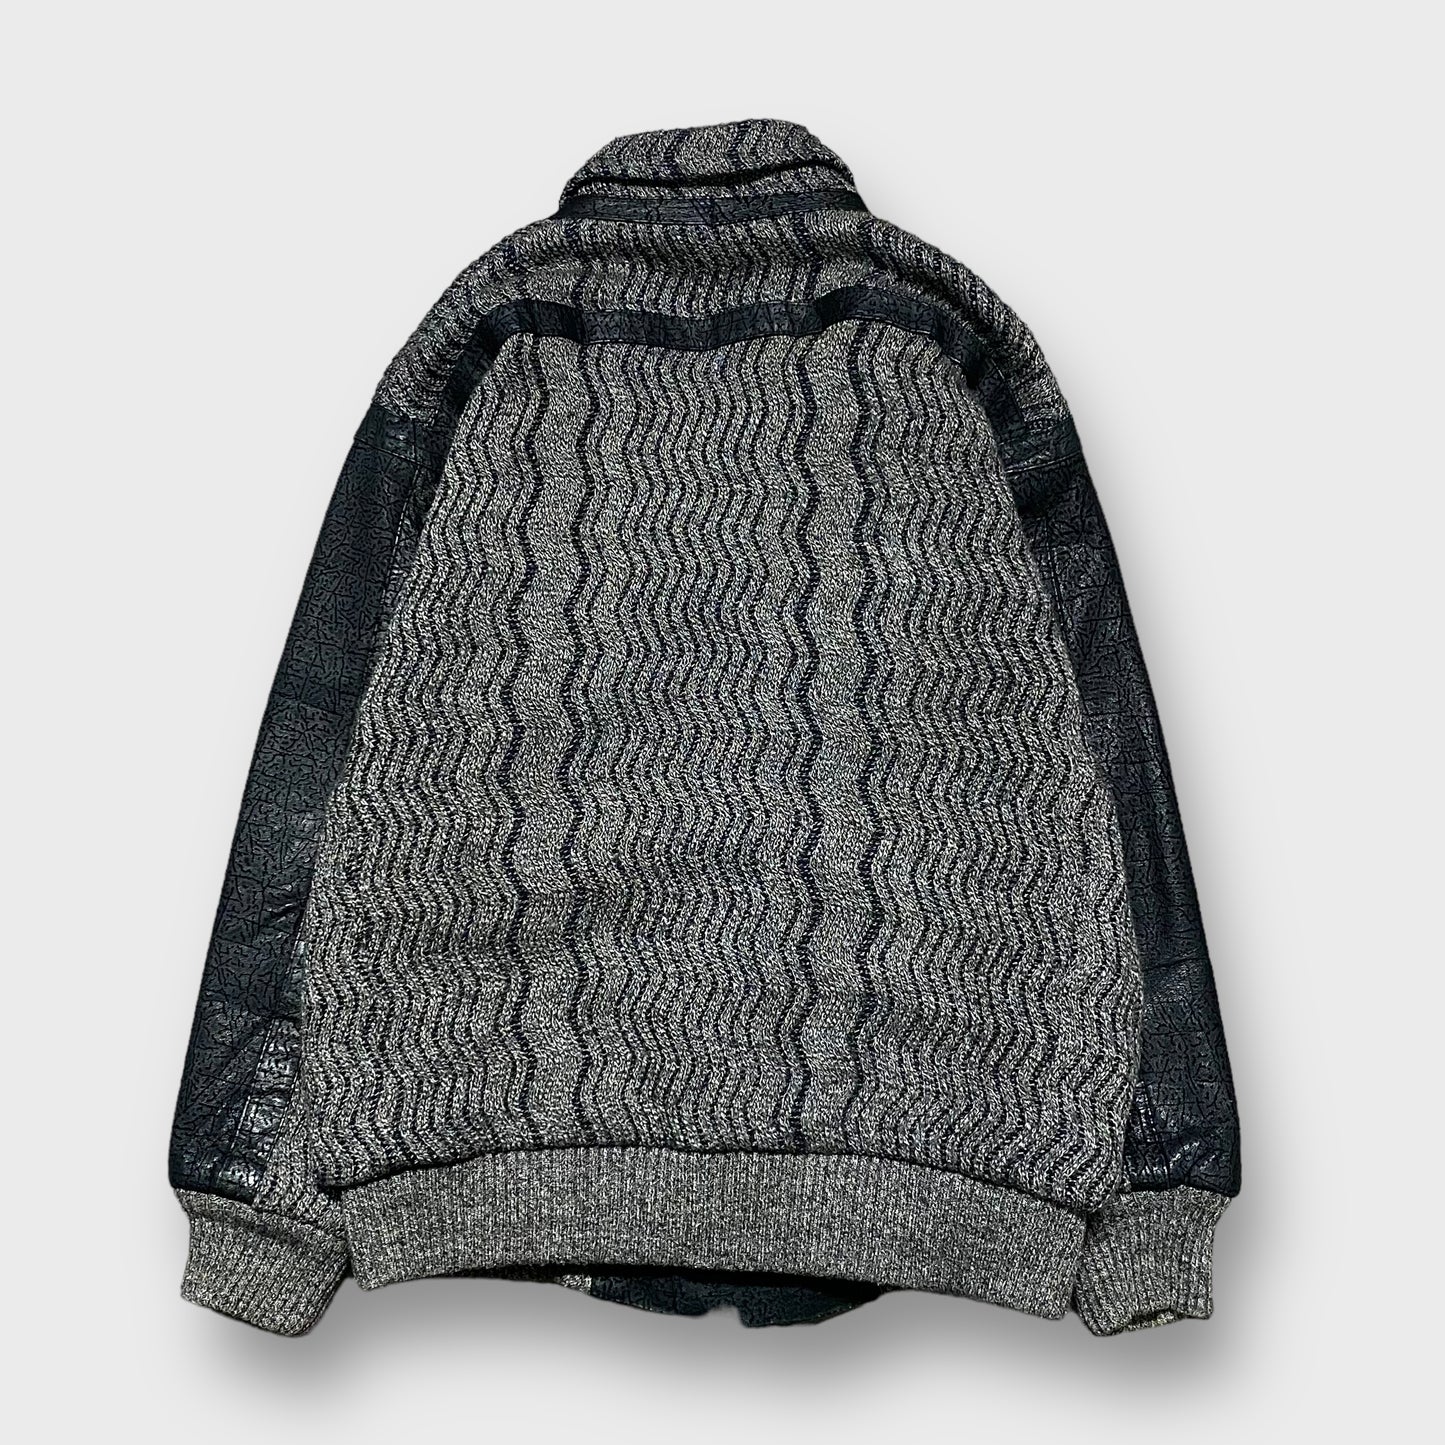 90's "Nino Foriero" Showl collar leather switching knit cardigan